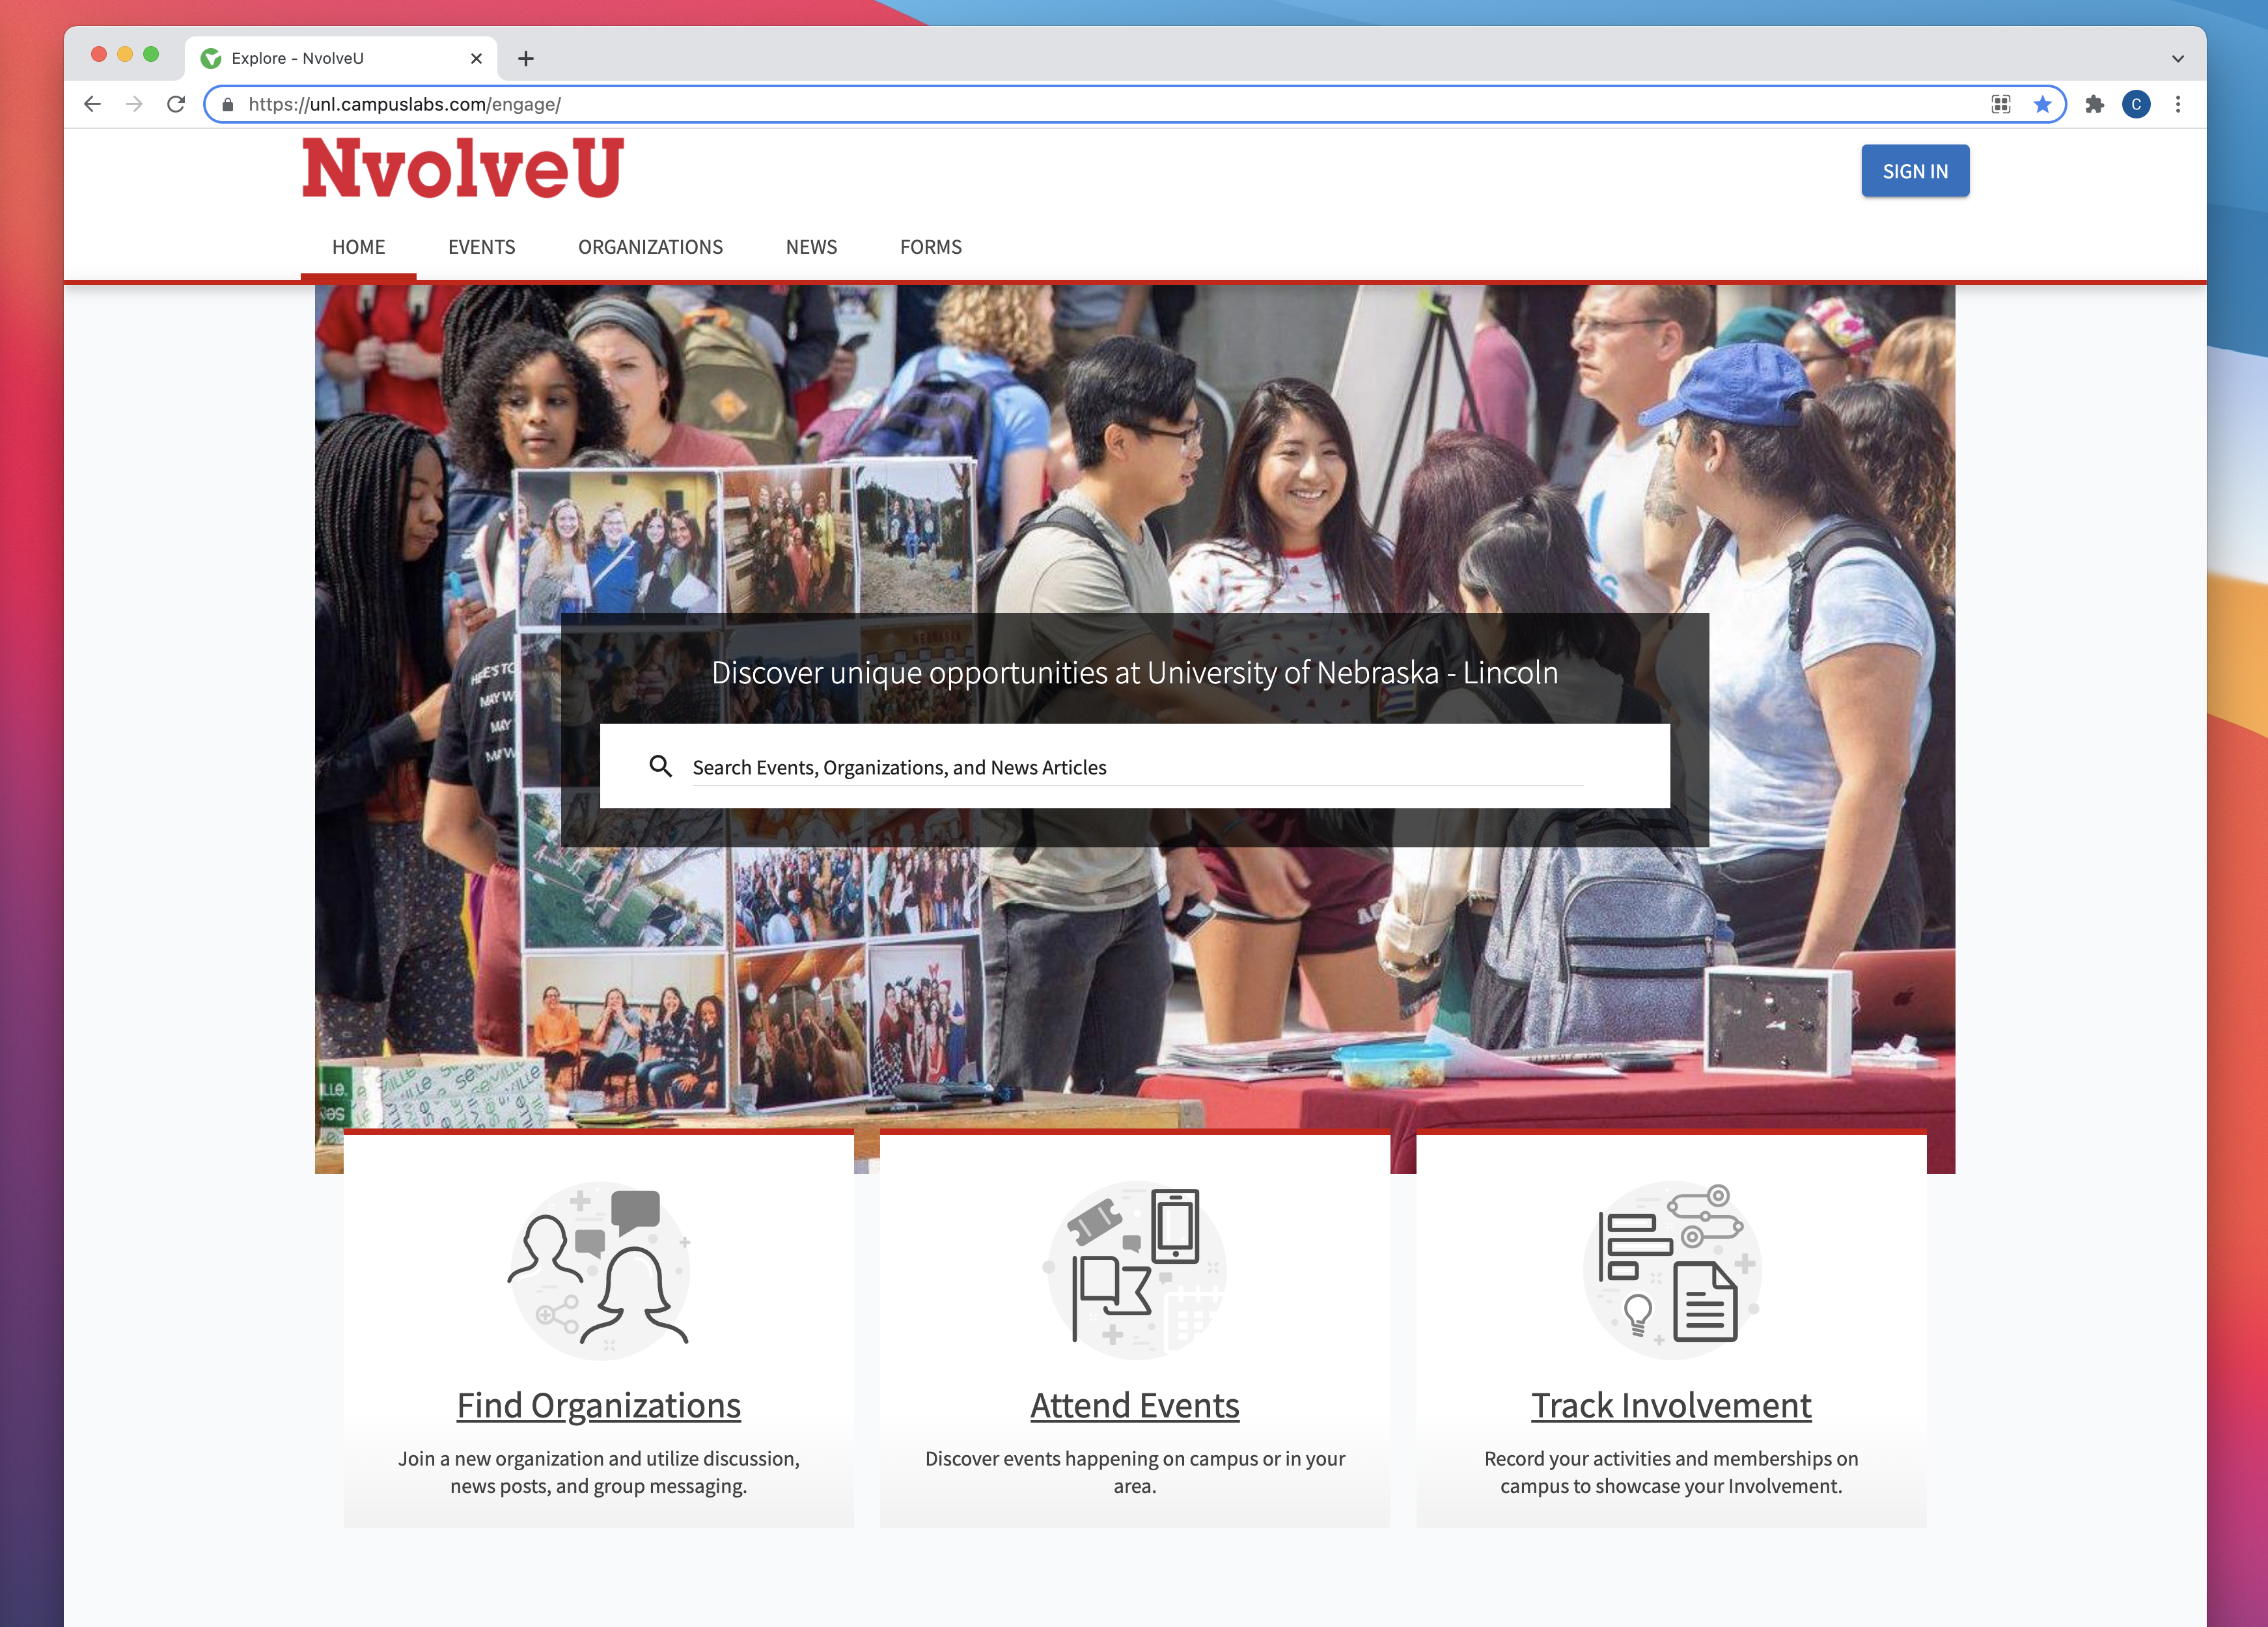 NvolveU debuts new personalized privacy settings 